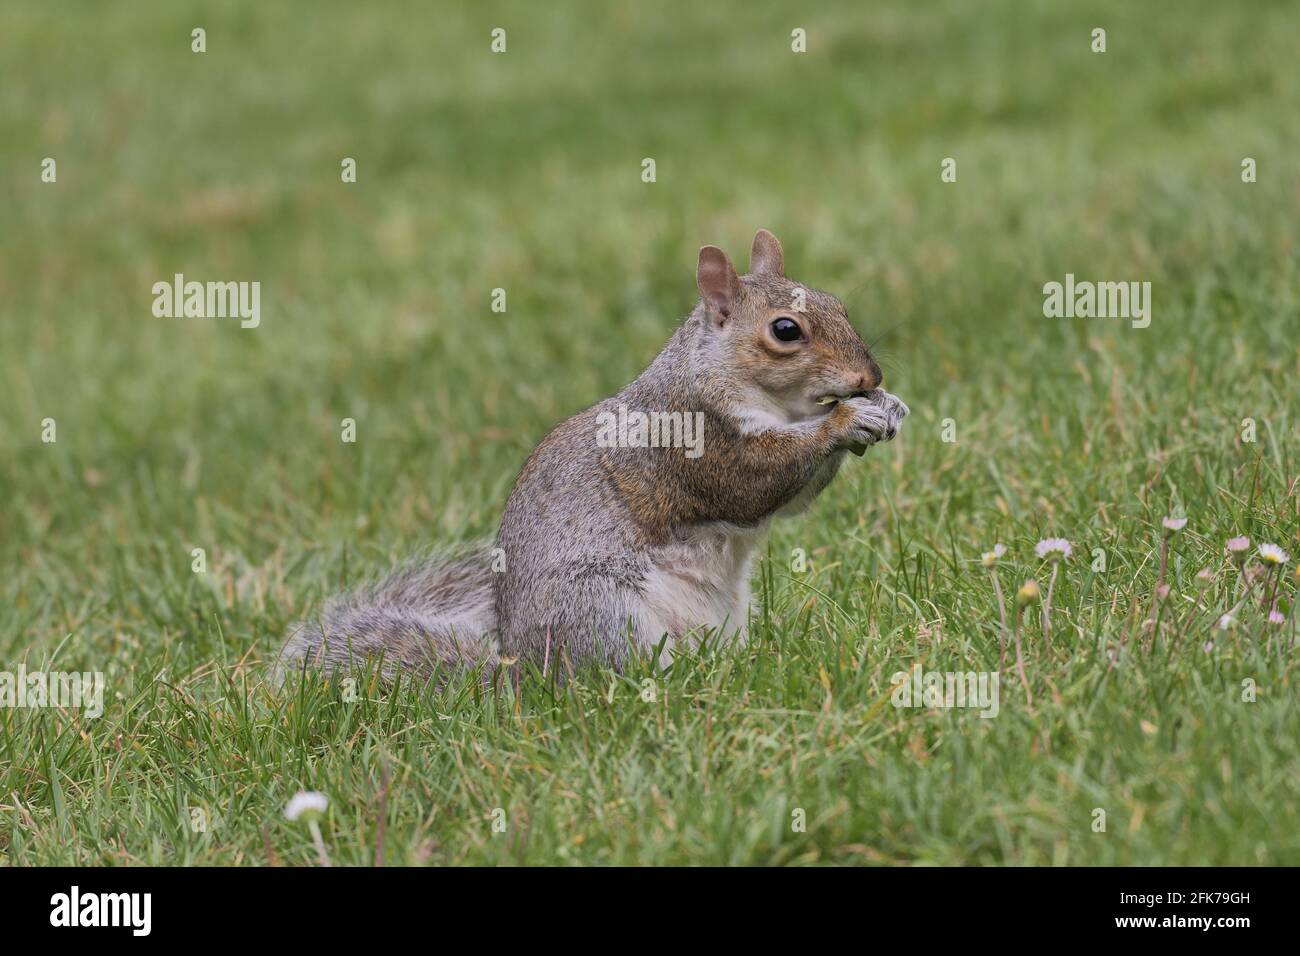 Squirrel in Villa Reale park, Monza, Italy Stock Photo